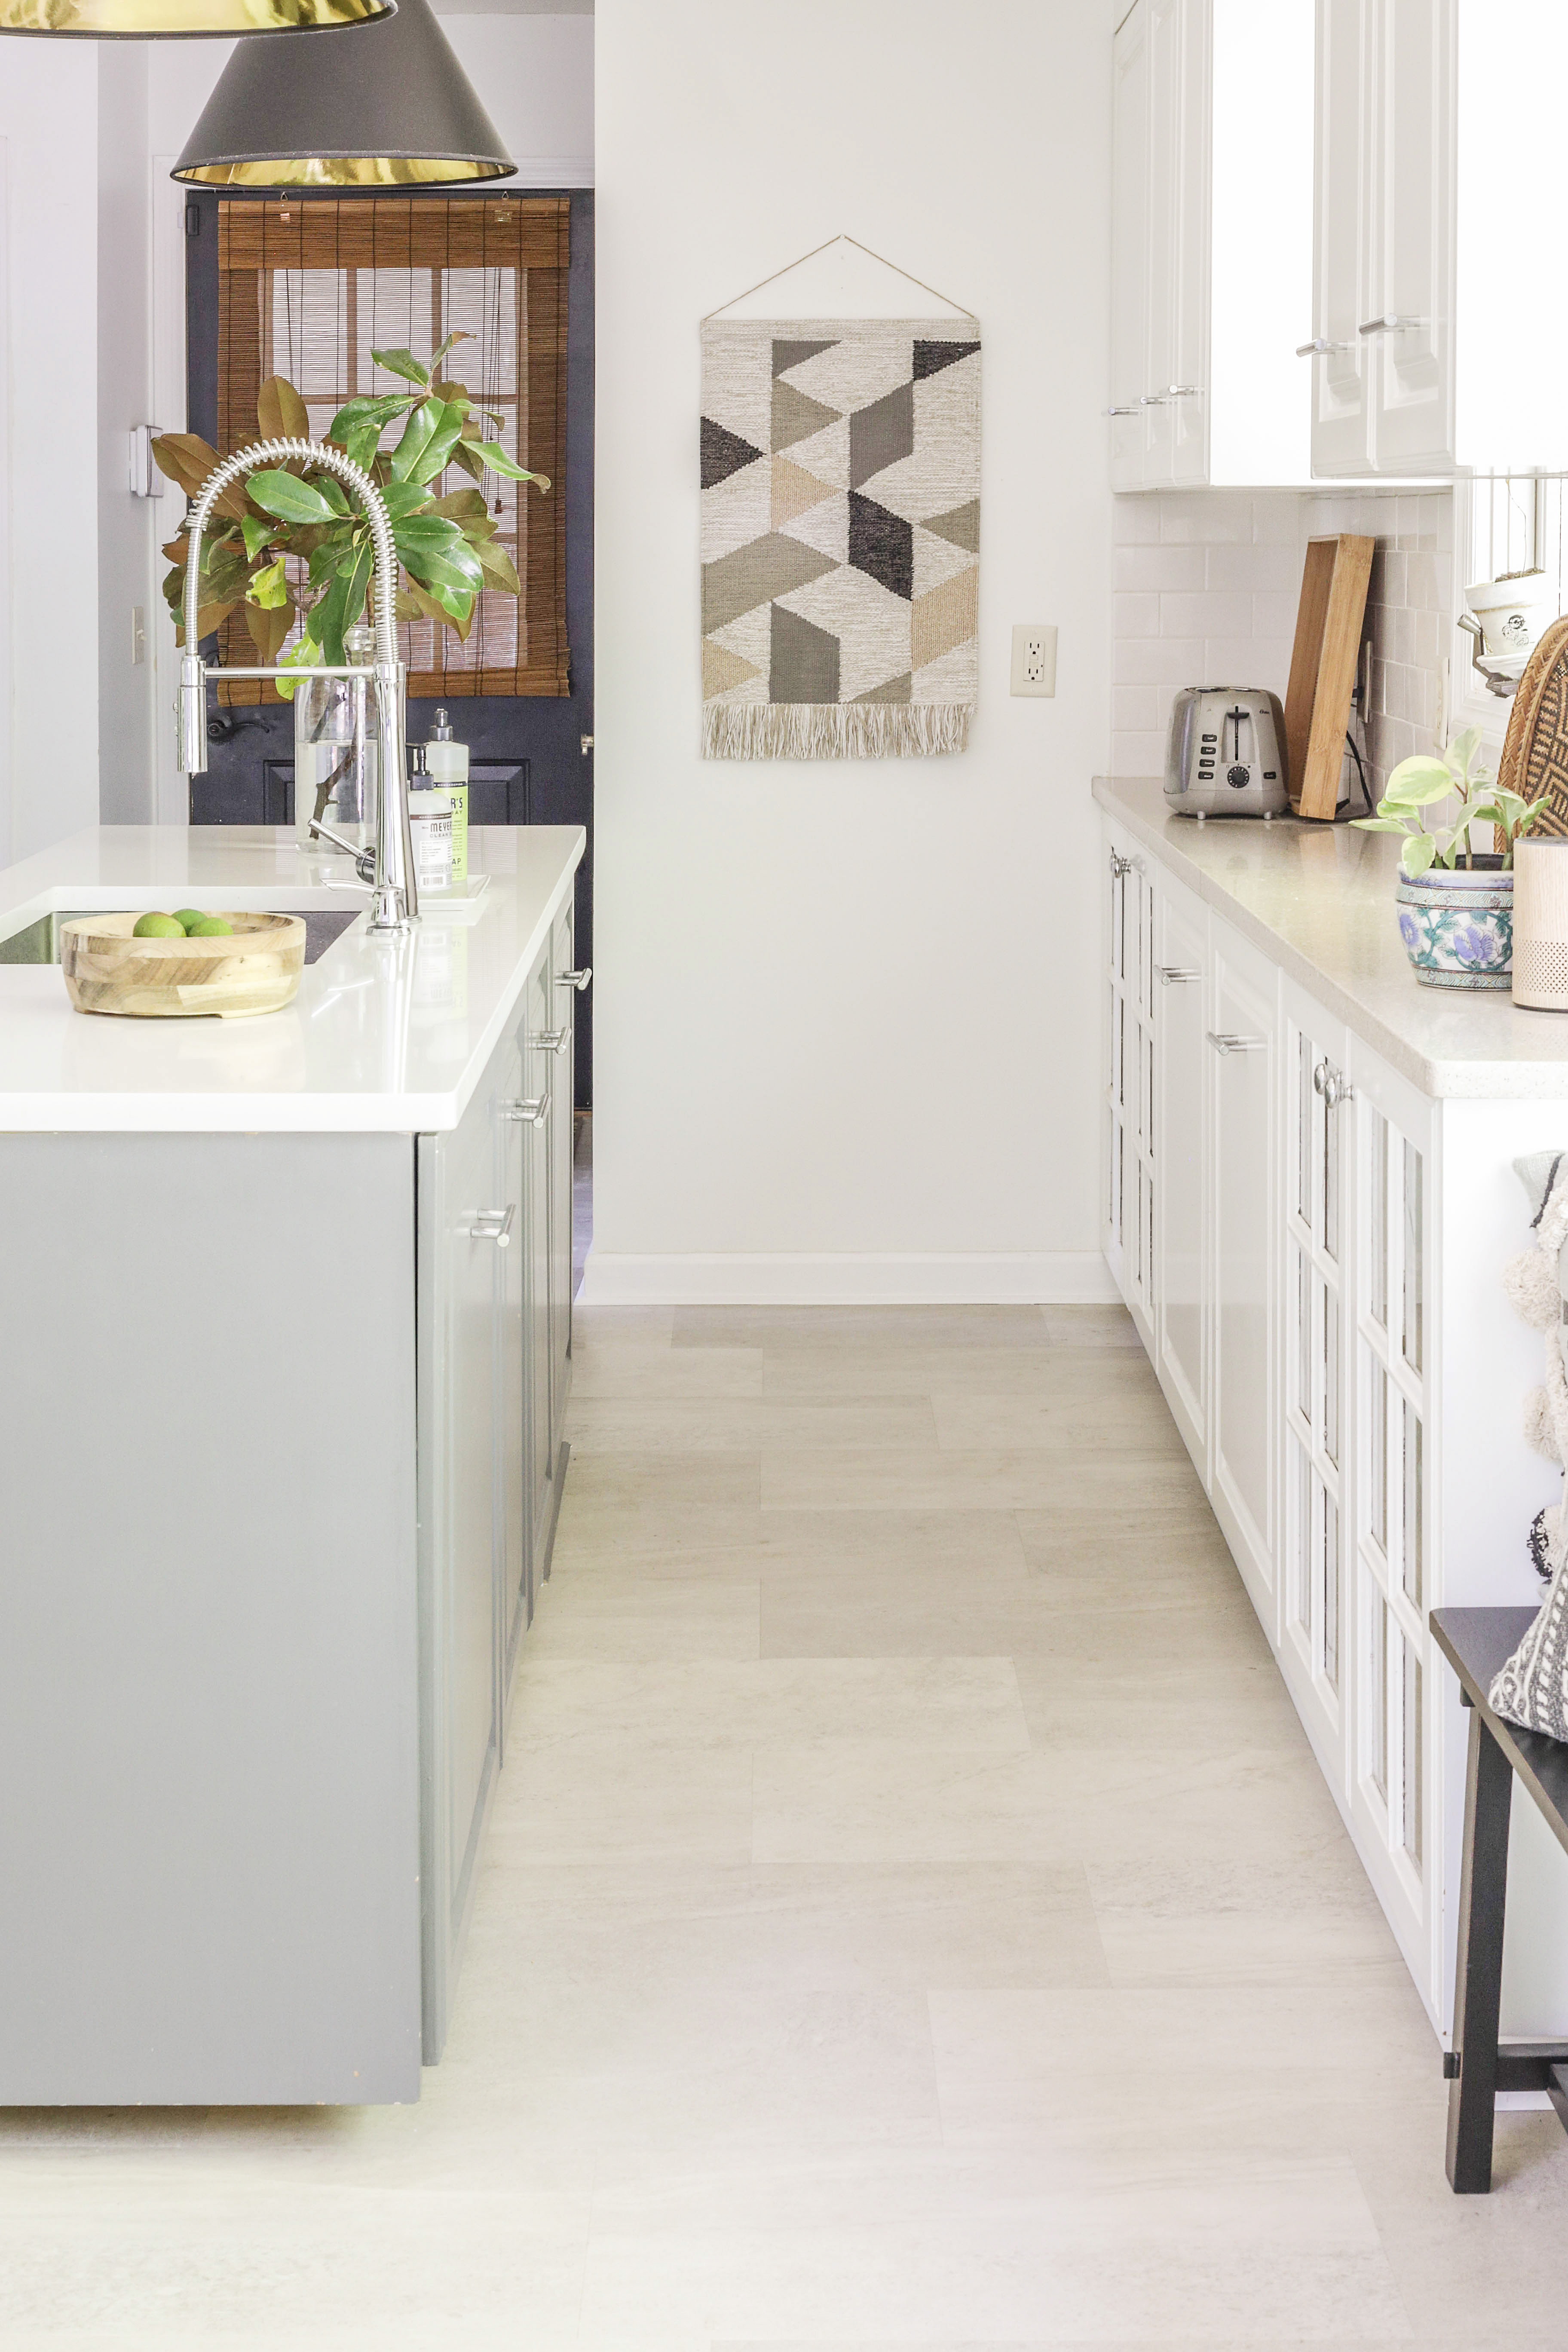 Luxury Vinyl Tile Over Existing, Luxury Vinyl Tile For Kitchen Floor